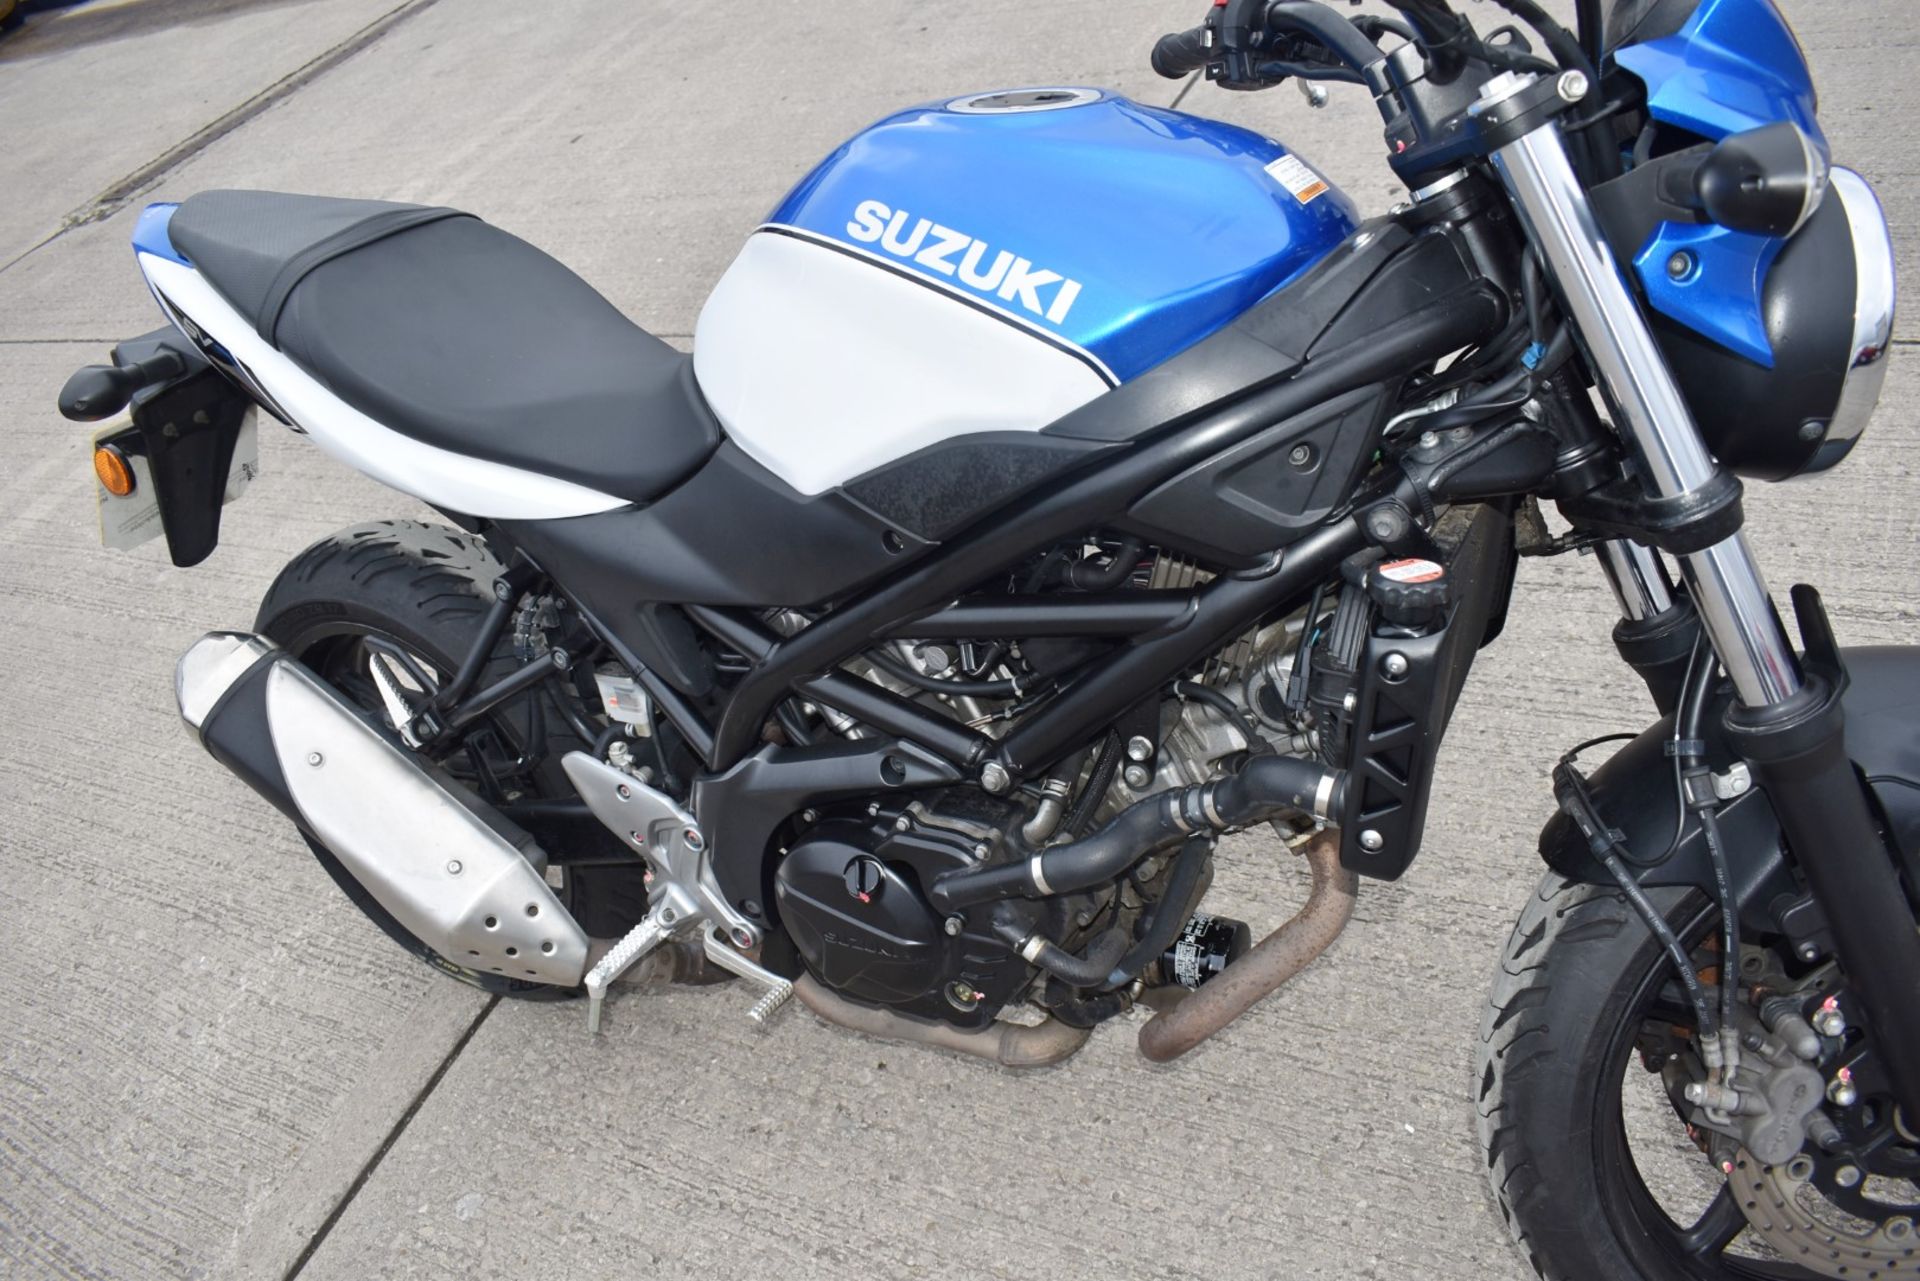 2018 Suzuki SV650 Motorcycle - BA18 UFV - Mileage: 18,188 - Image 24 of 25